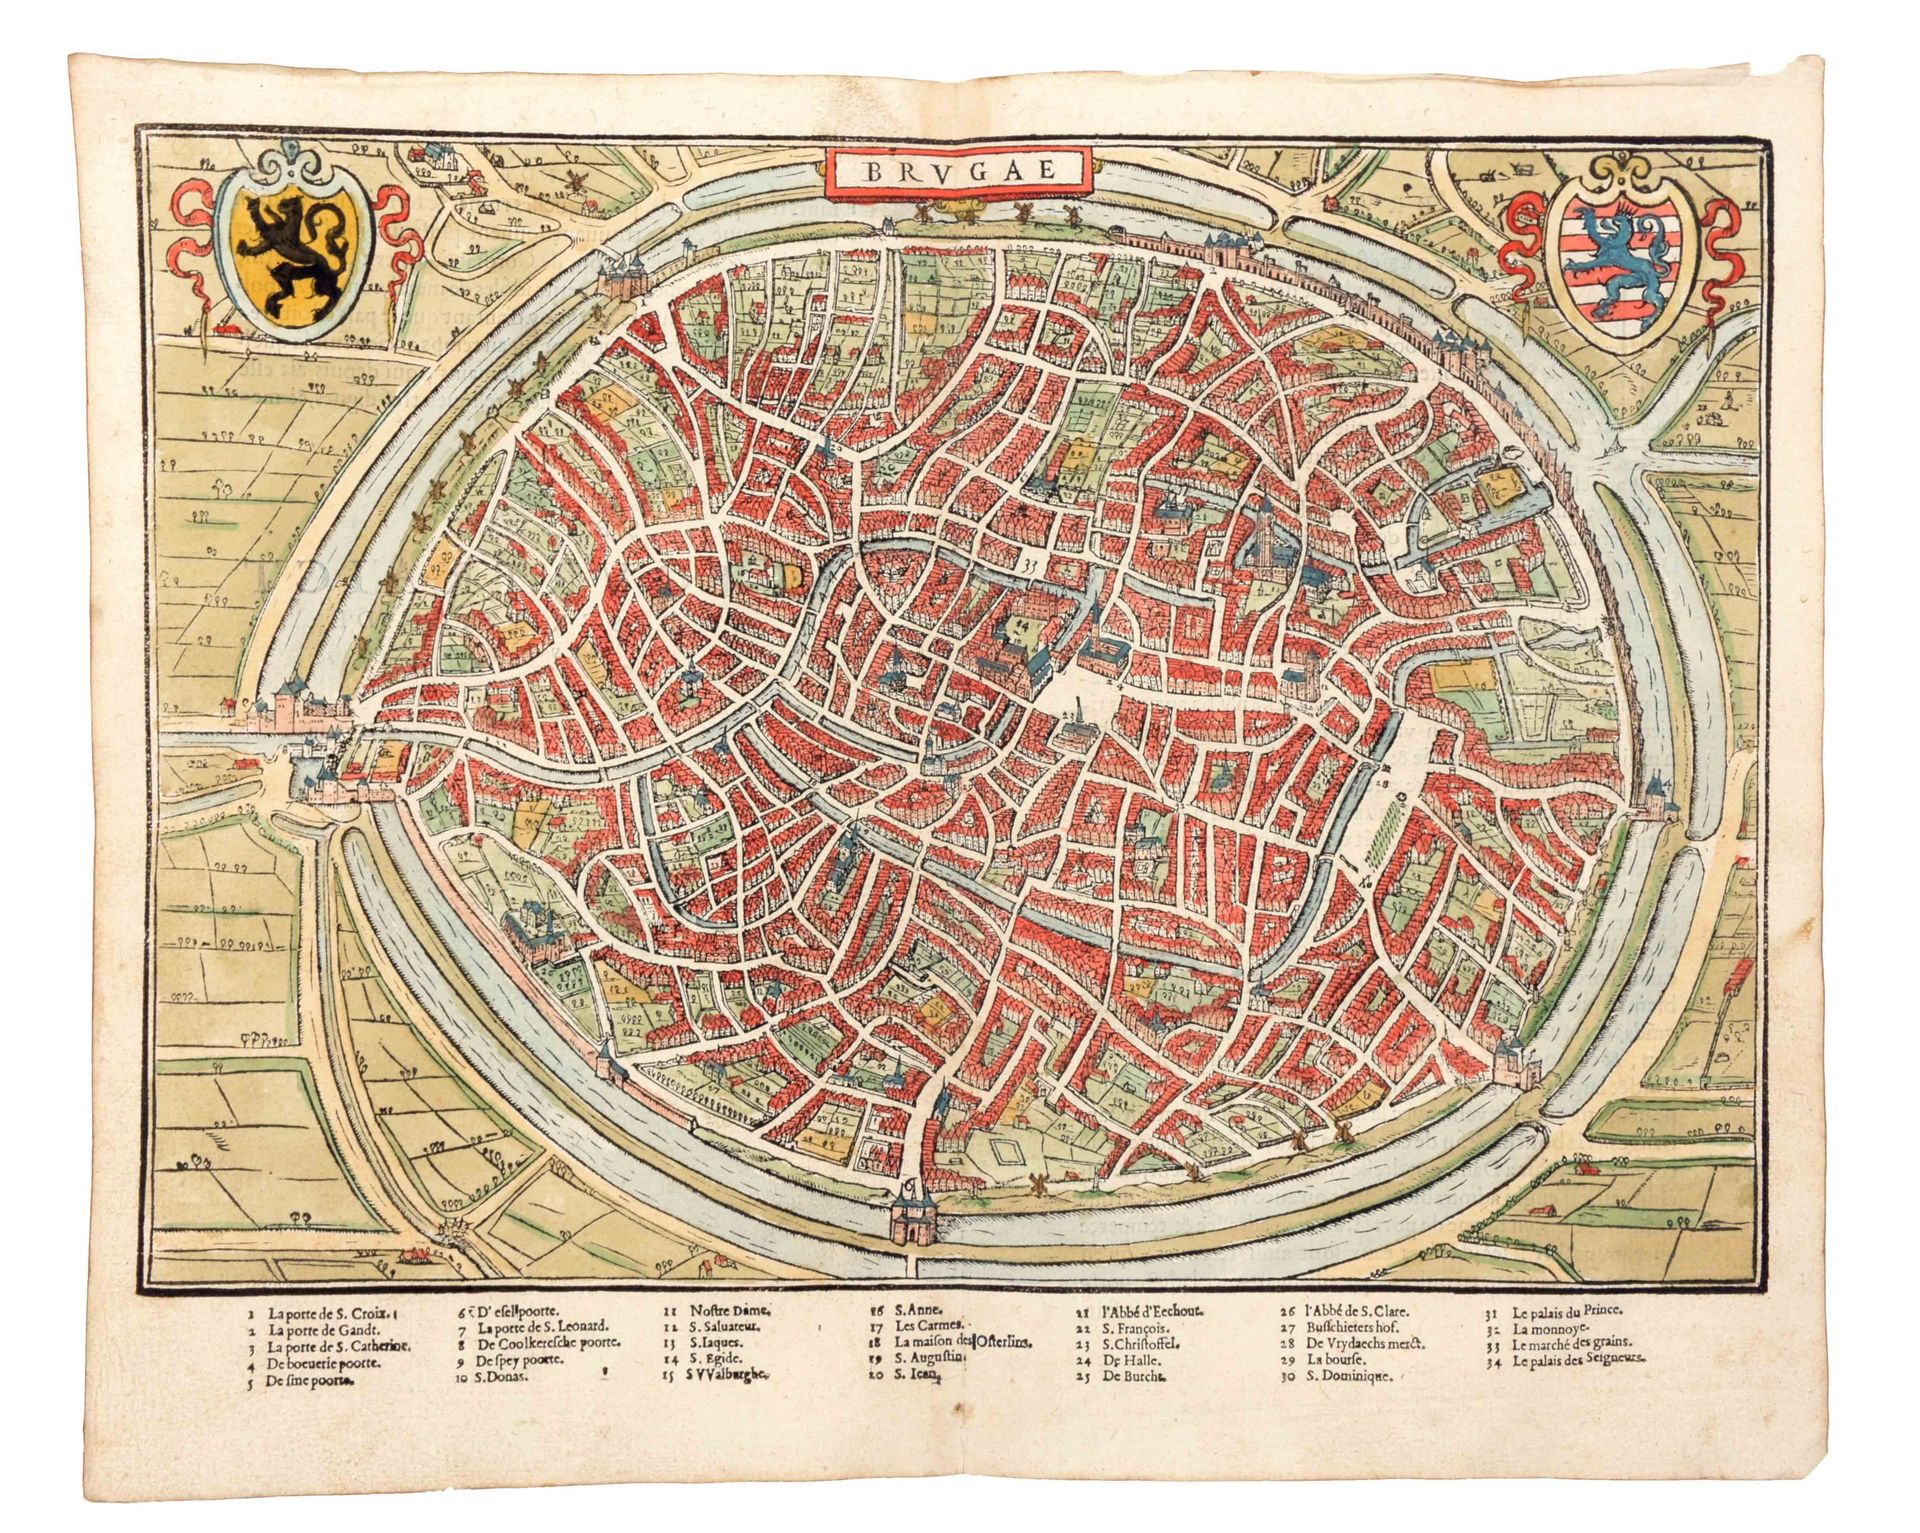 [Brugge] Brugae

Houtsnede (26,5 x 34,5 cm) met plattegrond van de stad uit Guic&hellip;